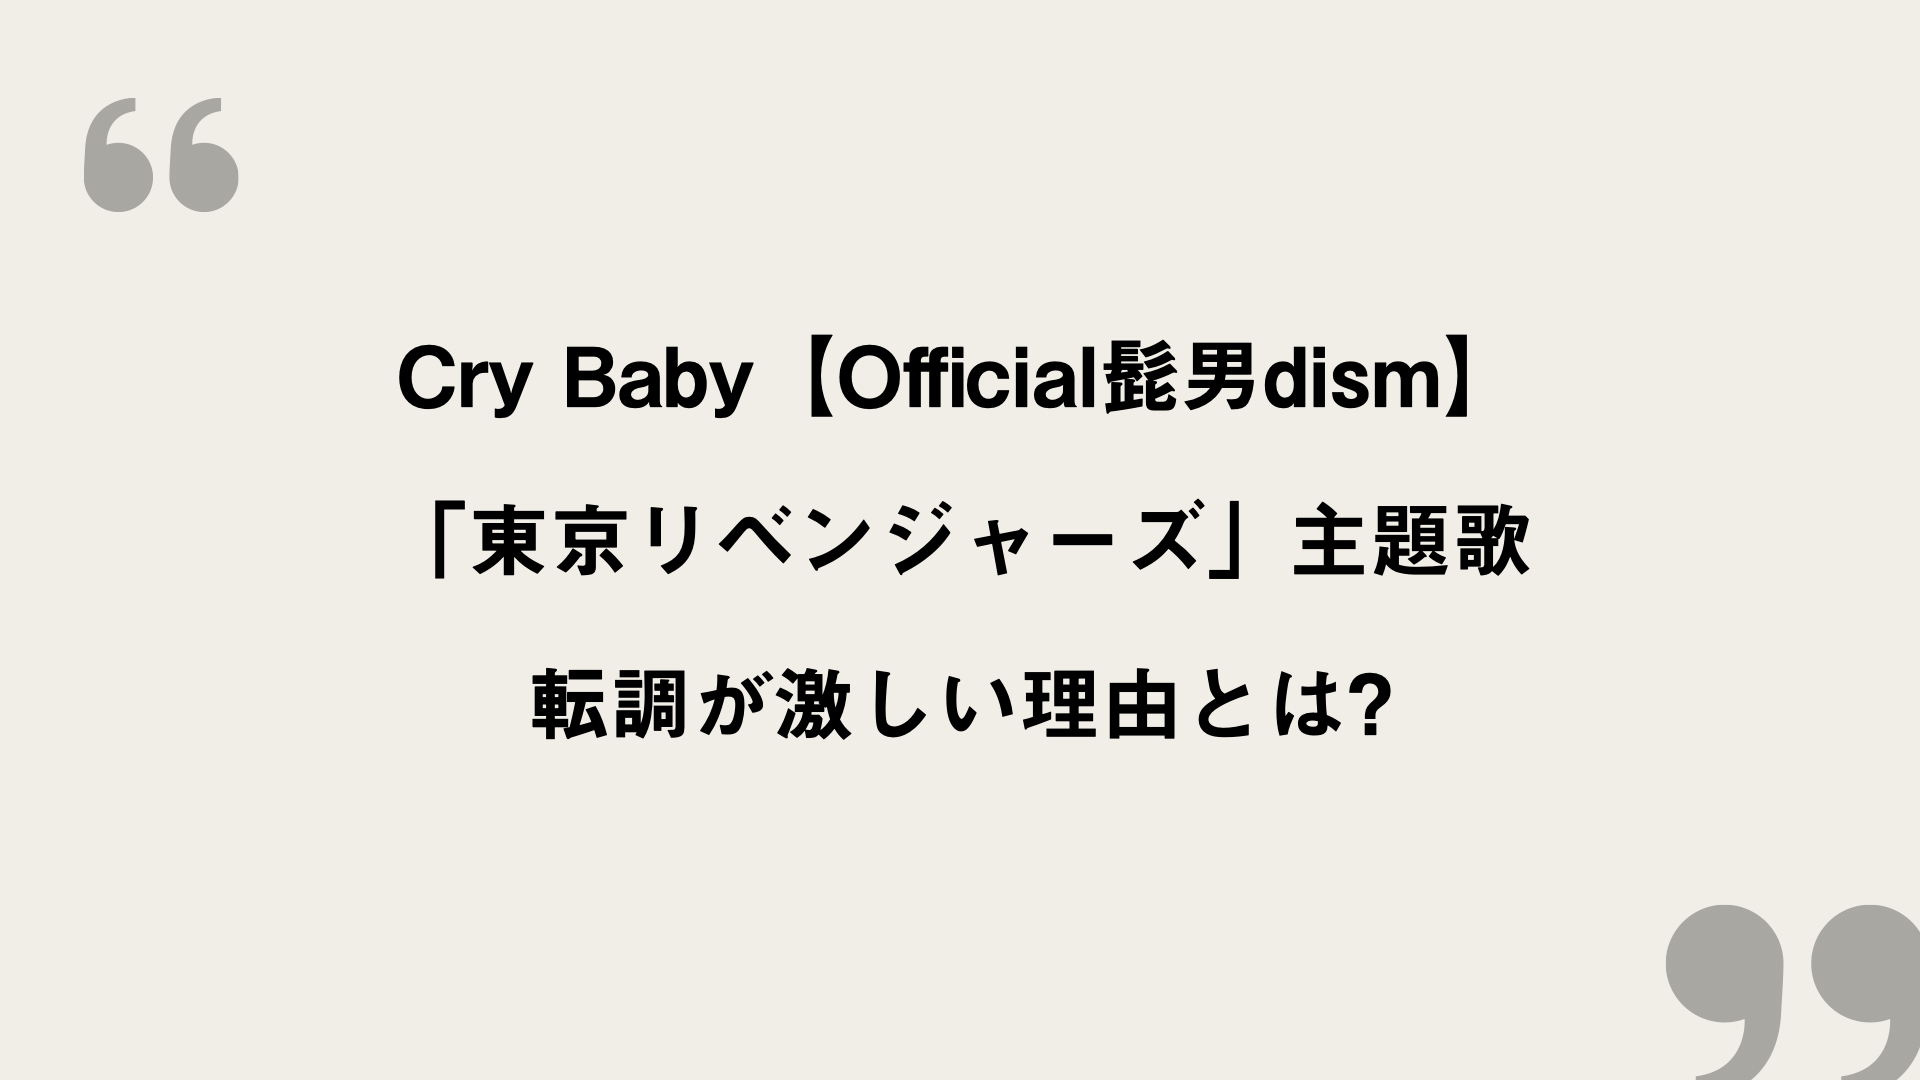 Cry Baby Official髭男dism 歌詞の意味を考察 東京リベンジャーズ 主題歌 転調が激しい理由とは Framu Media